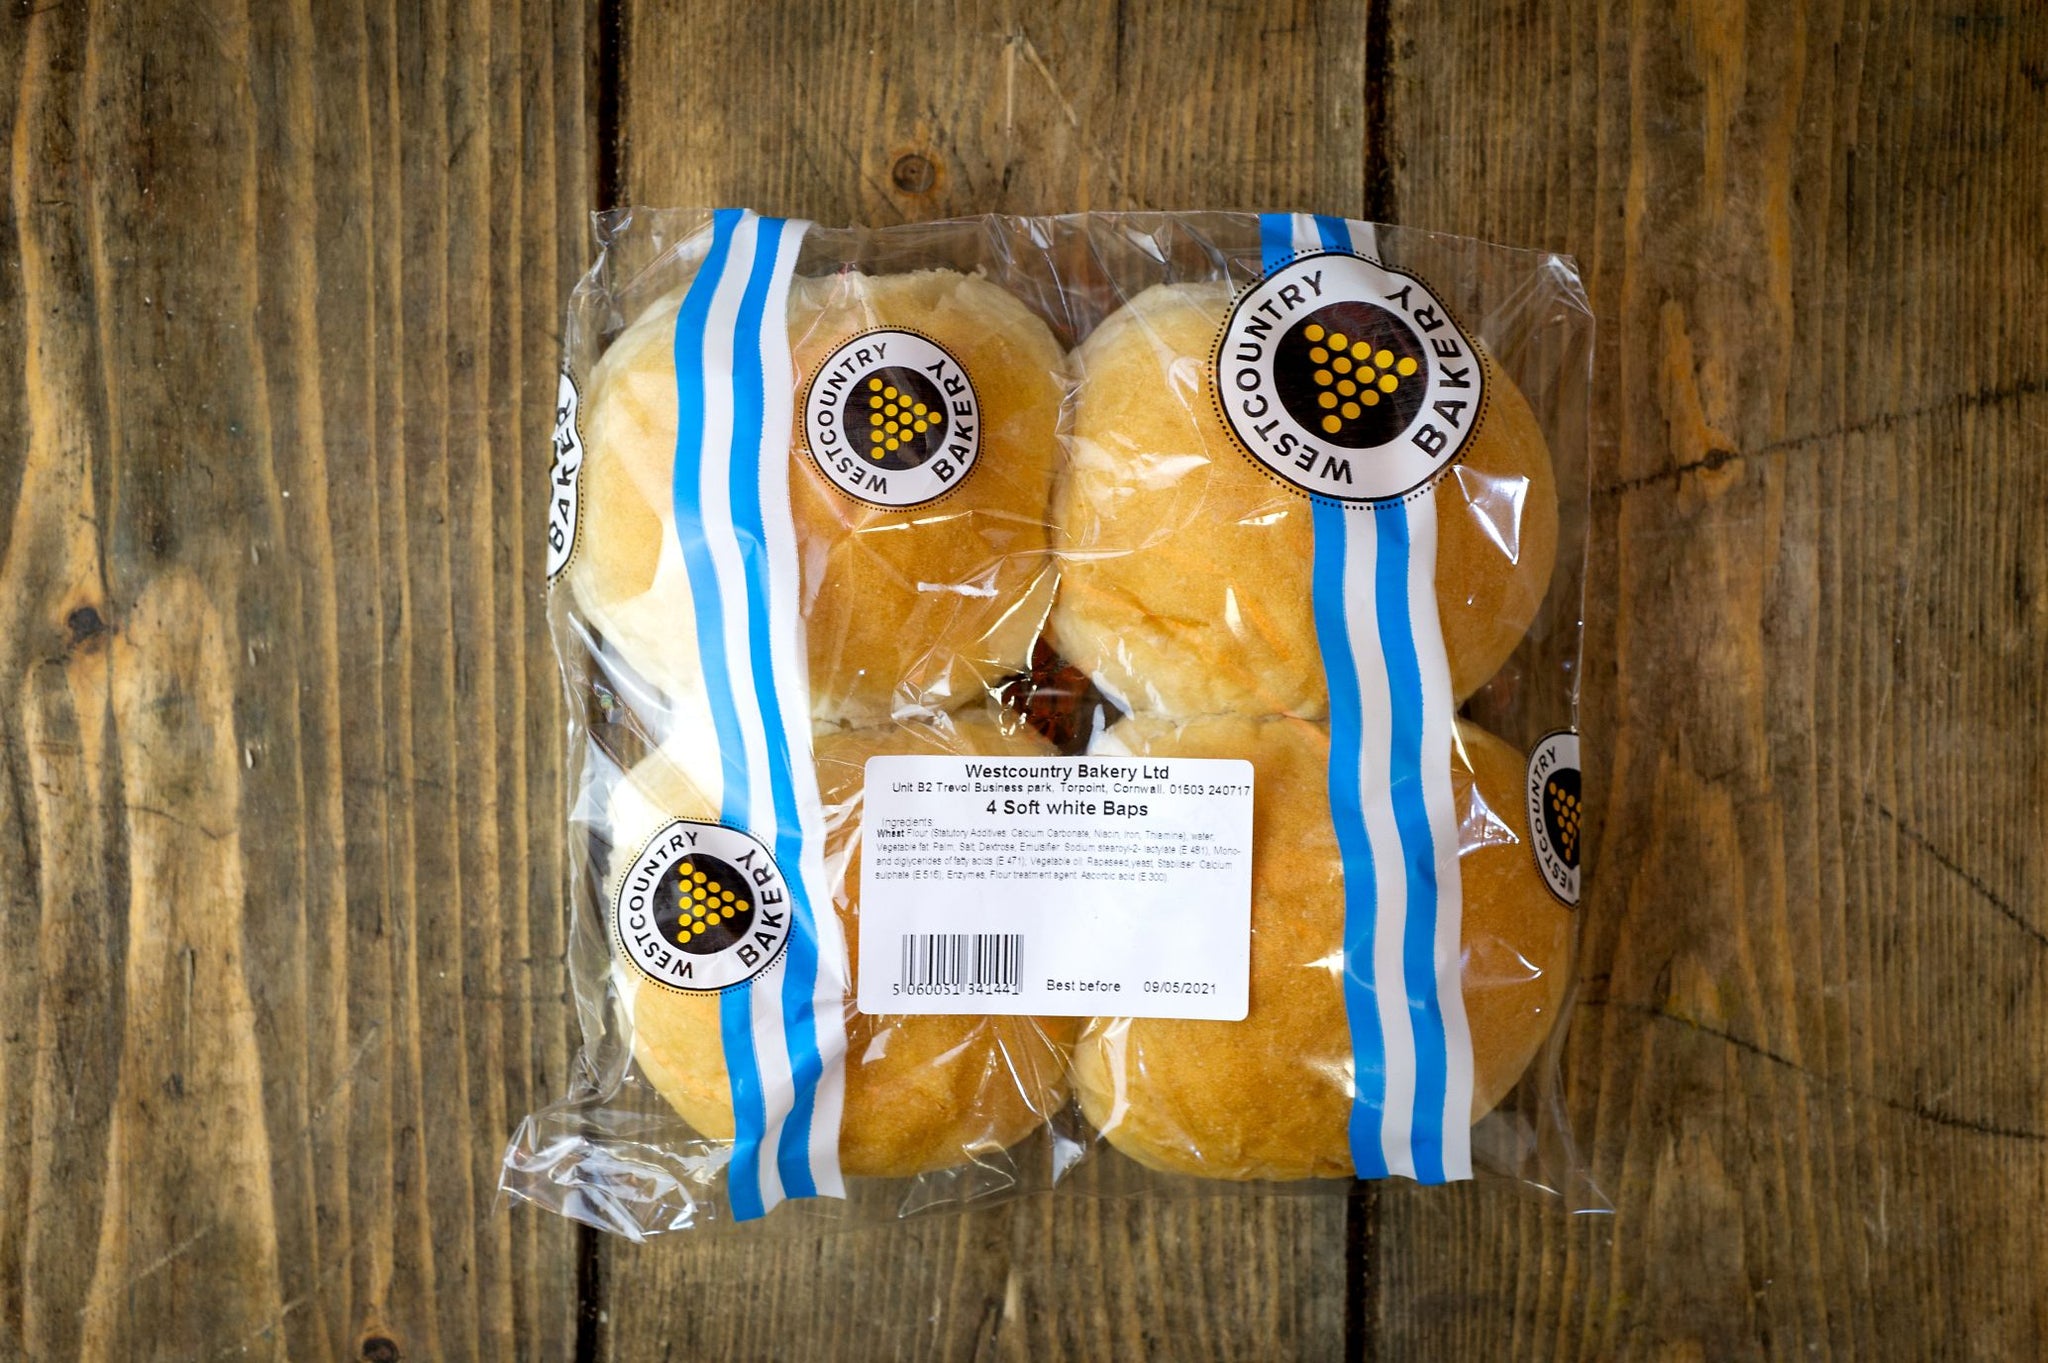 Bakery: Bread (Westcountry)- White Frisbee bap x 4 (subscription)